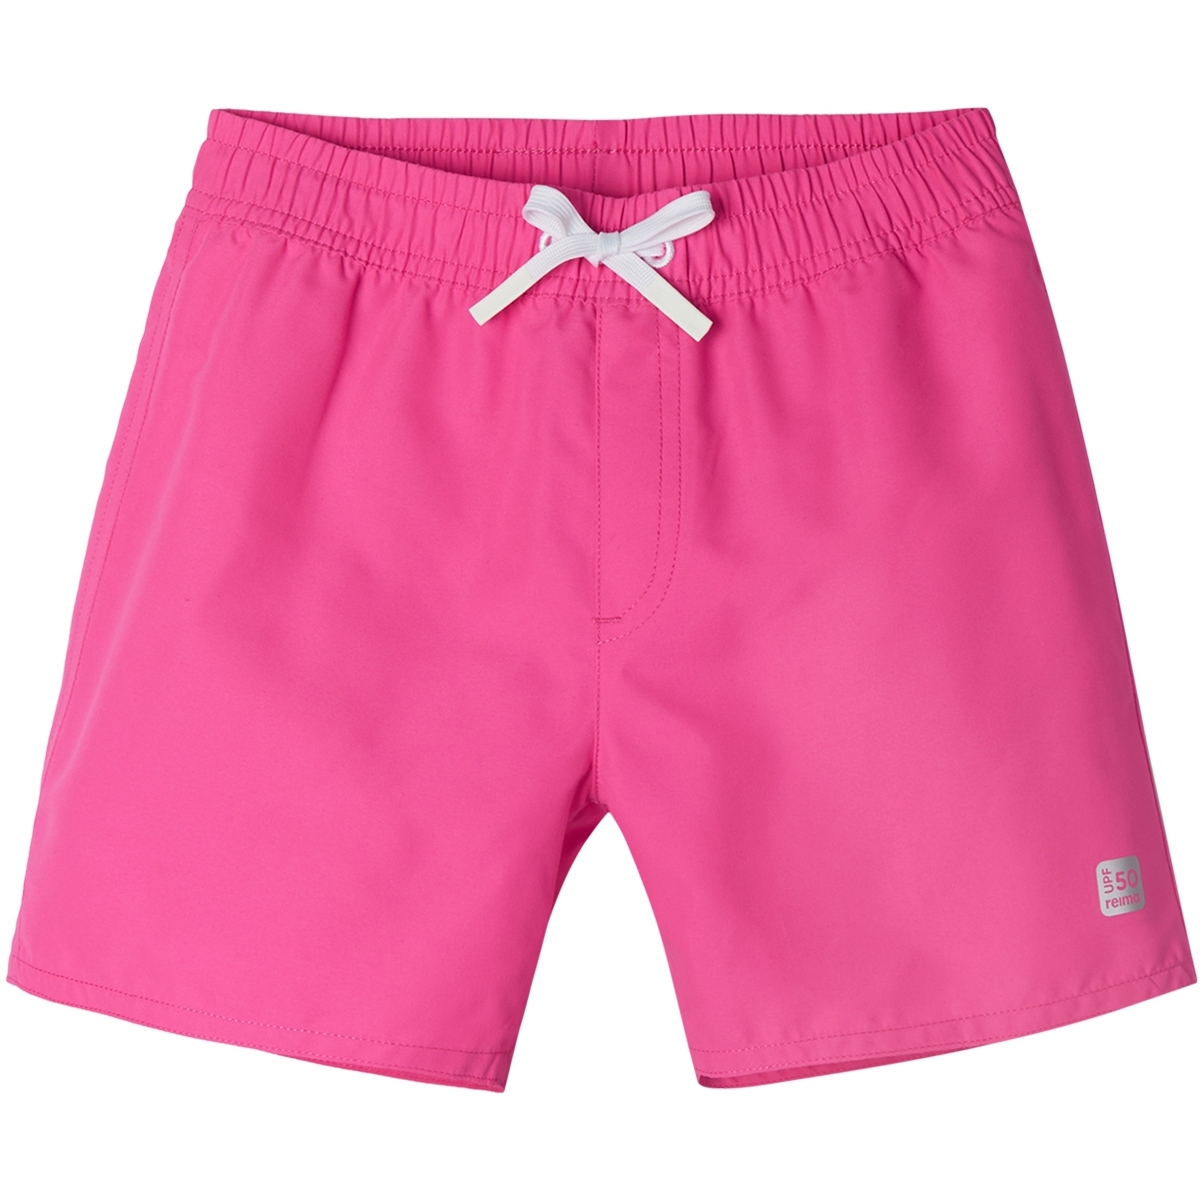 Picture of Reima Somero Swim Shorts Kids - fuchsia pink 4600